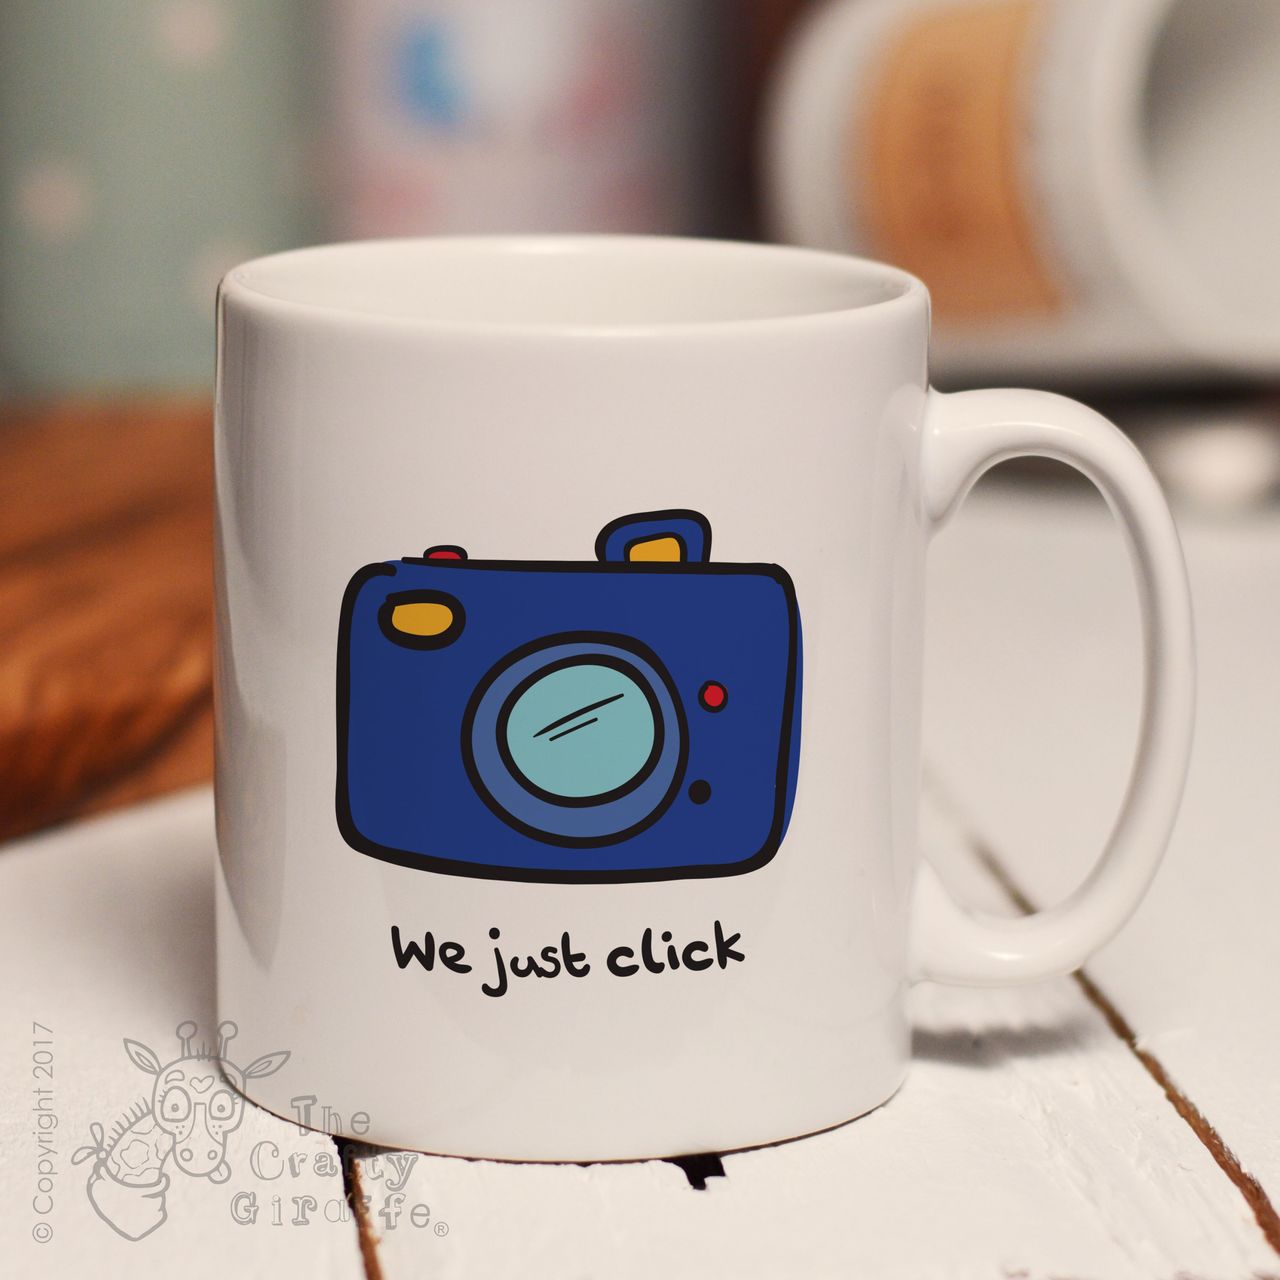 We just click mug